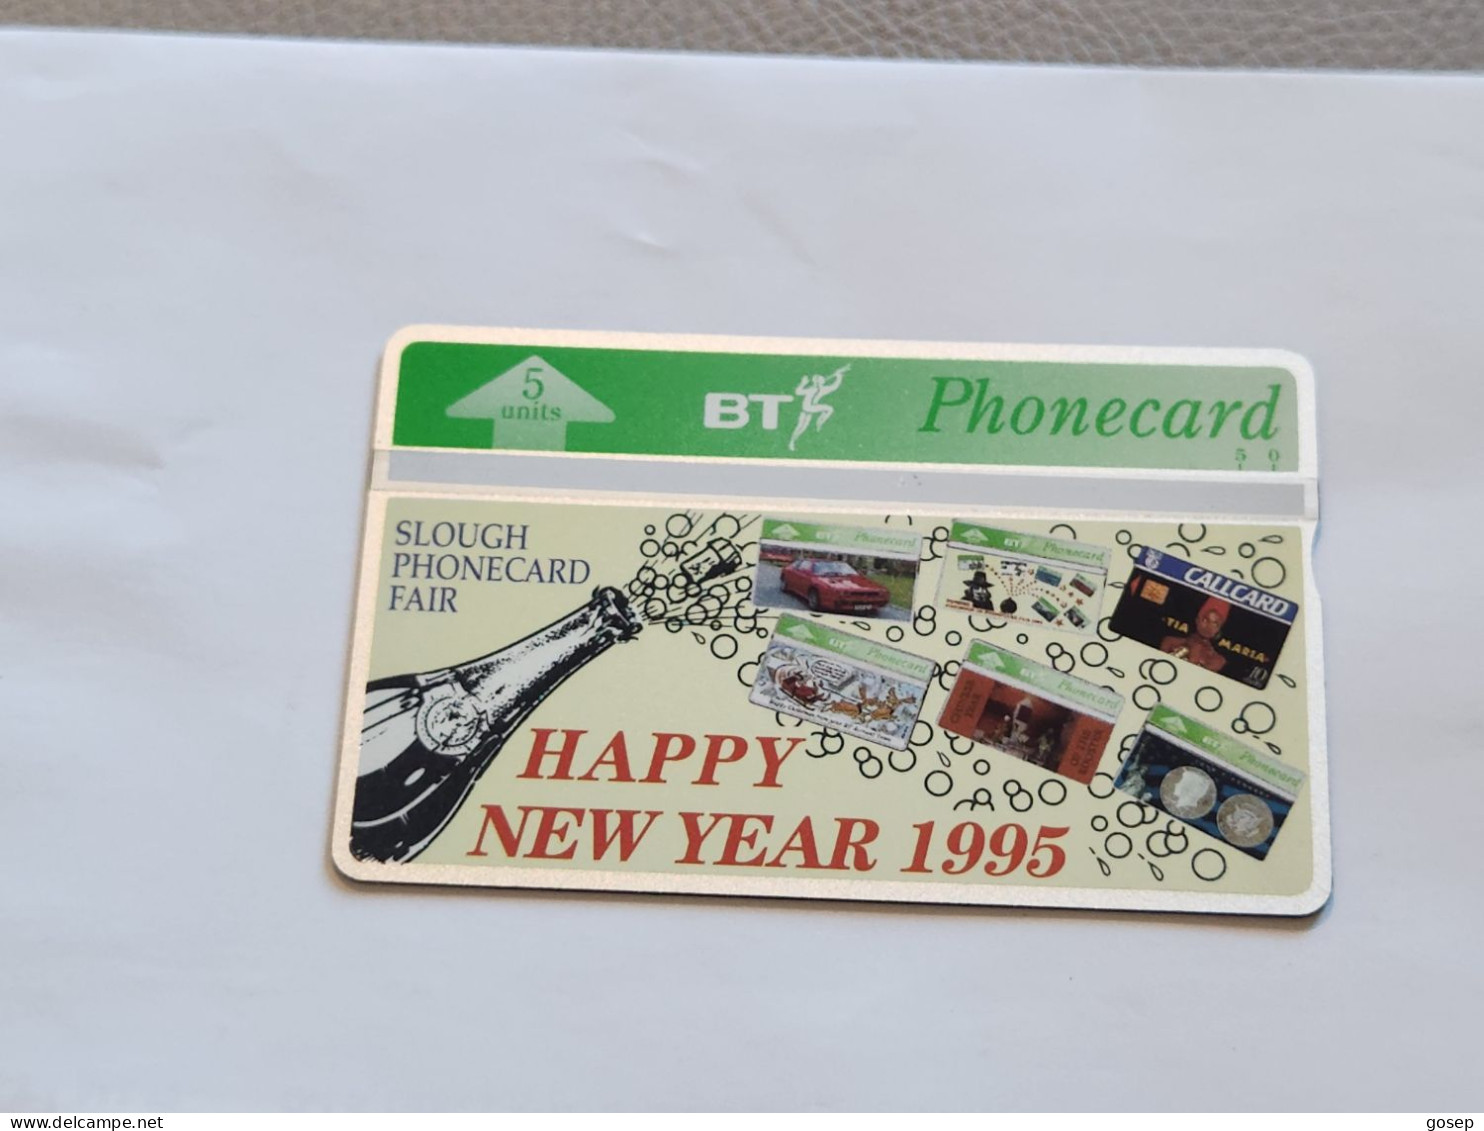 United Kingdom-(BTG-444)-Slough Phonecard Fair-(382)(5units)(405L50999)(tirage-500)-price Cataloge-10.00£-mint - BT Allgemeine